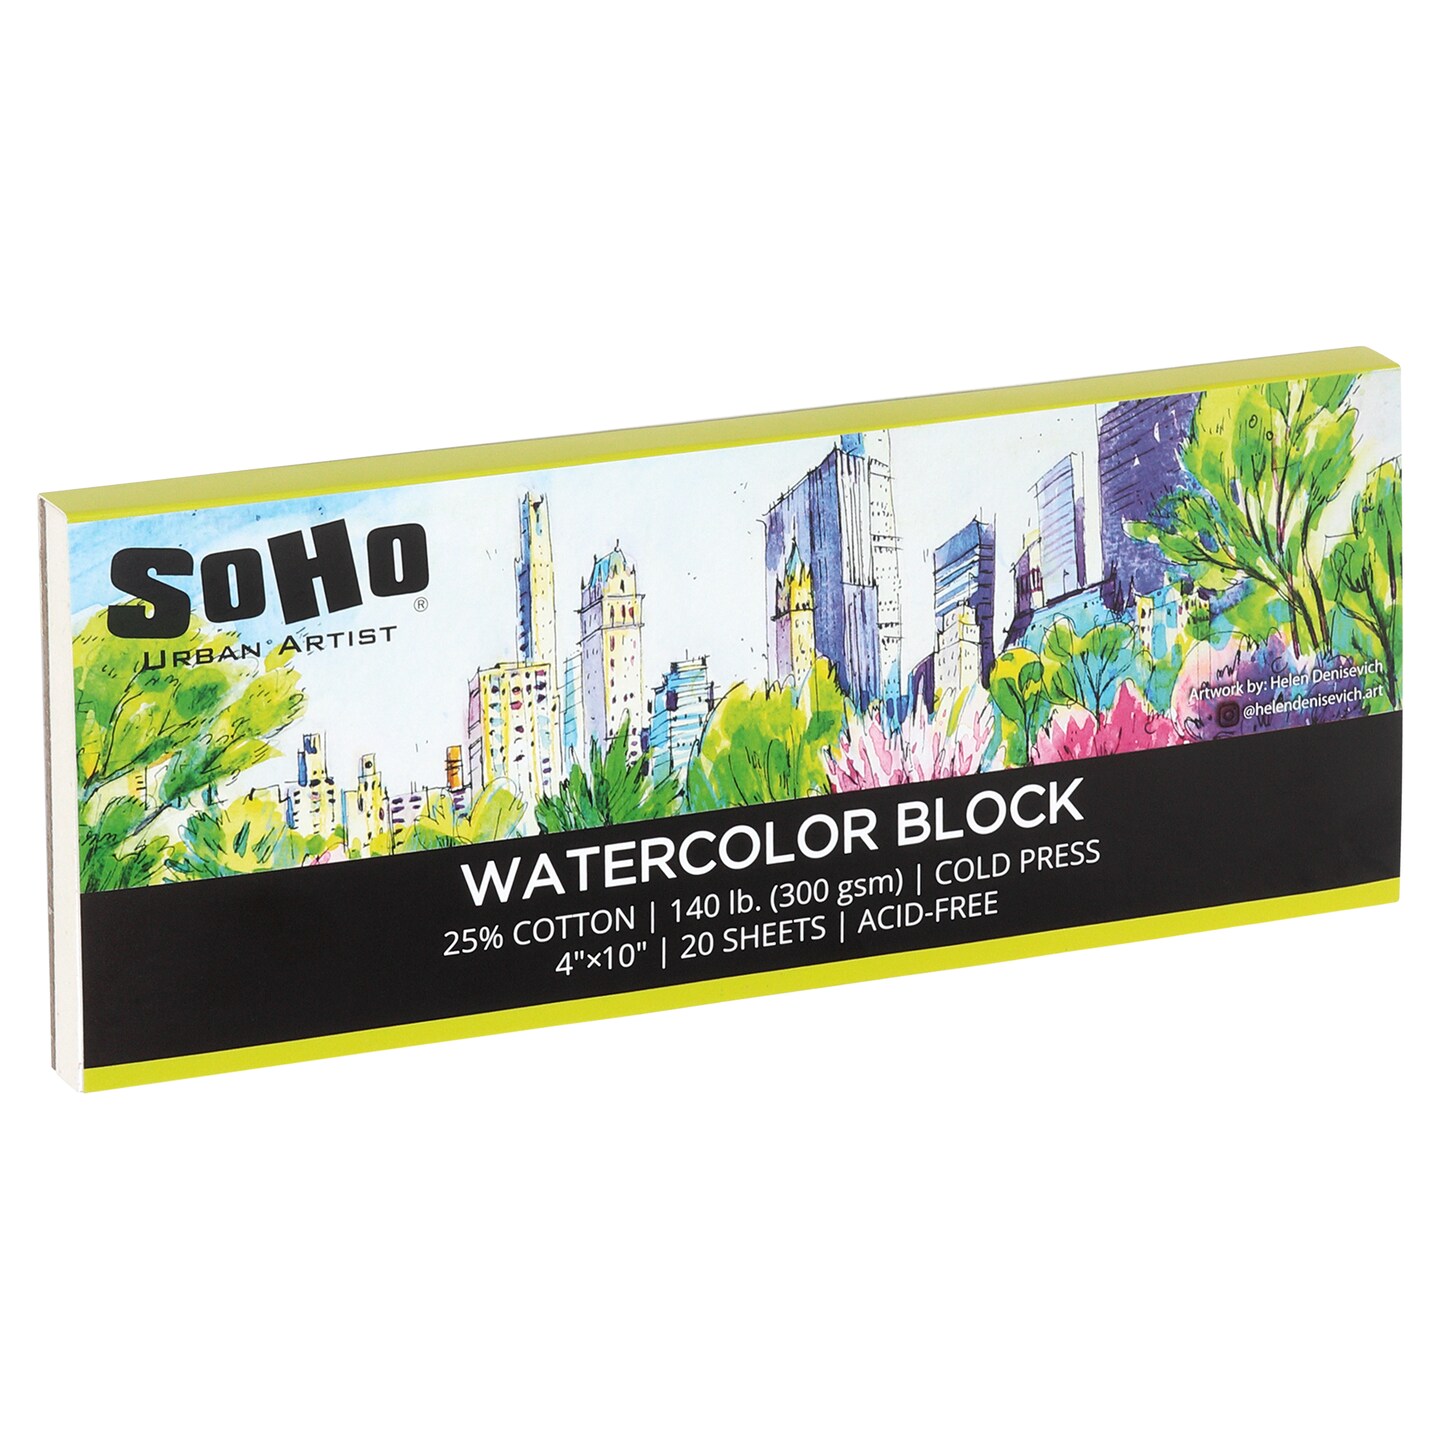 SoHo Urban Artist Watercolor Blocks - 140lb Cold Press, Professional, Sustainable, Acid-Free